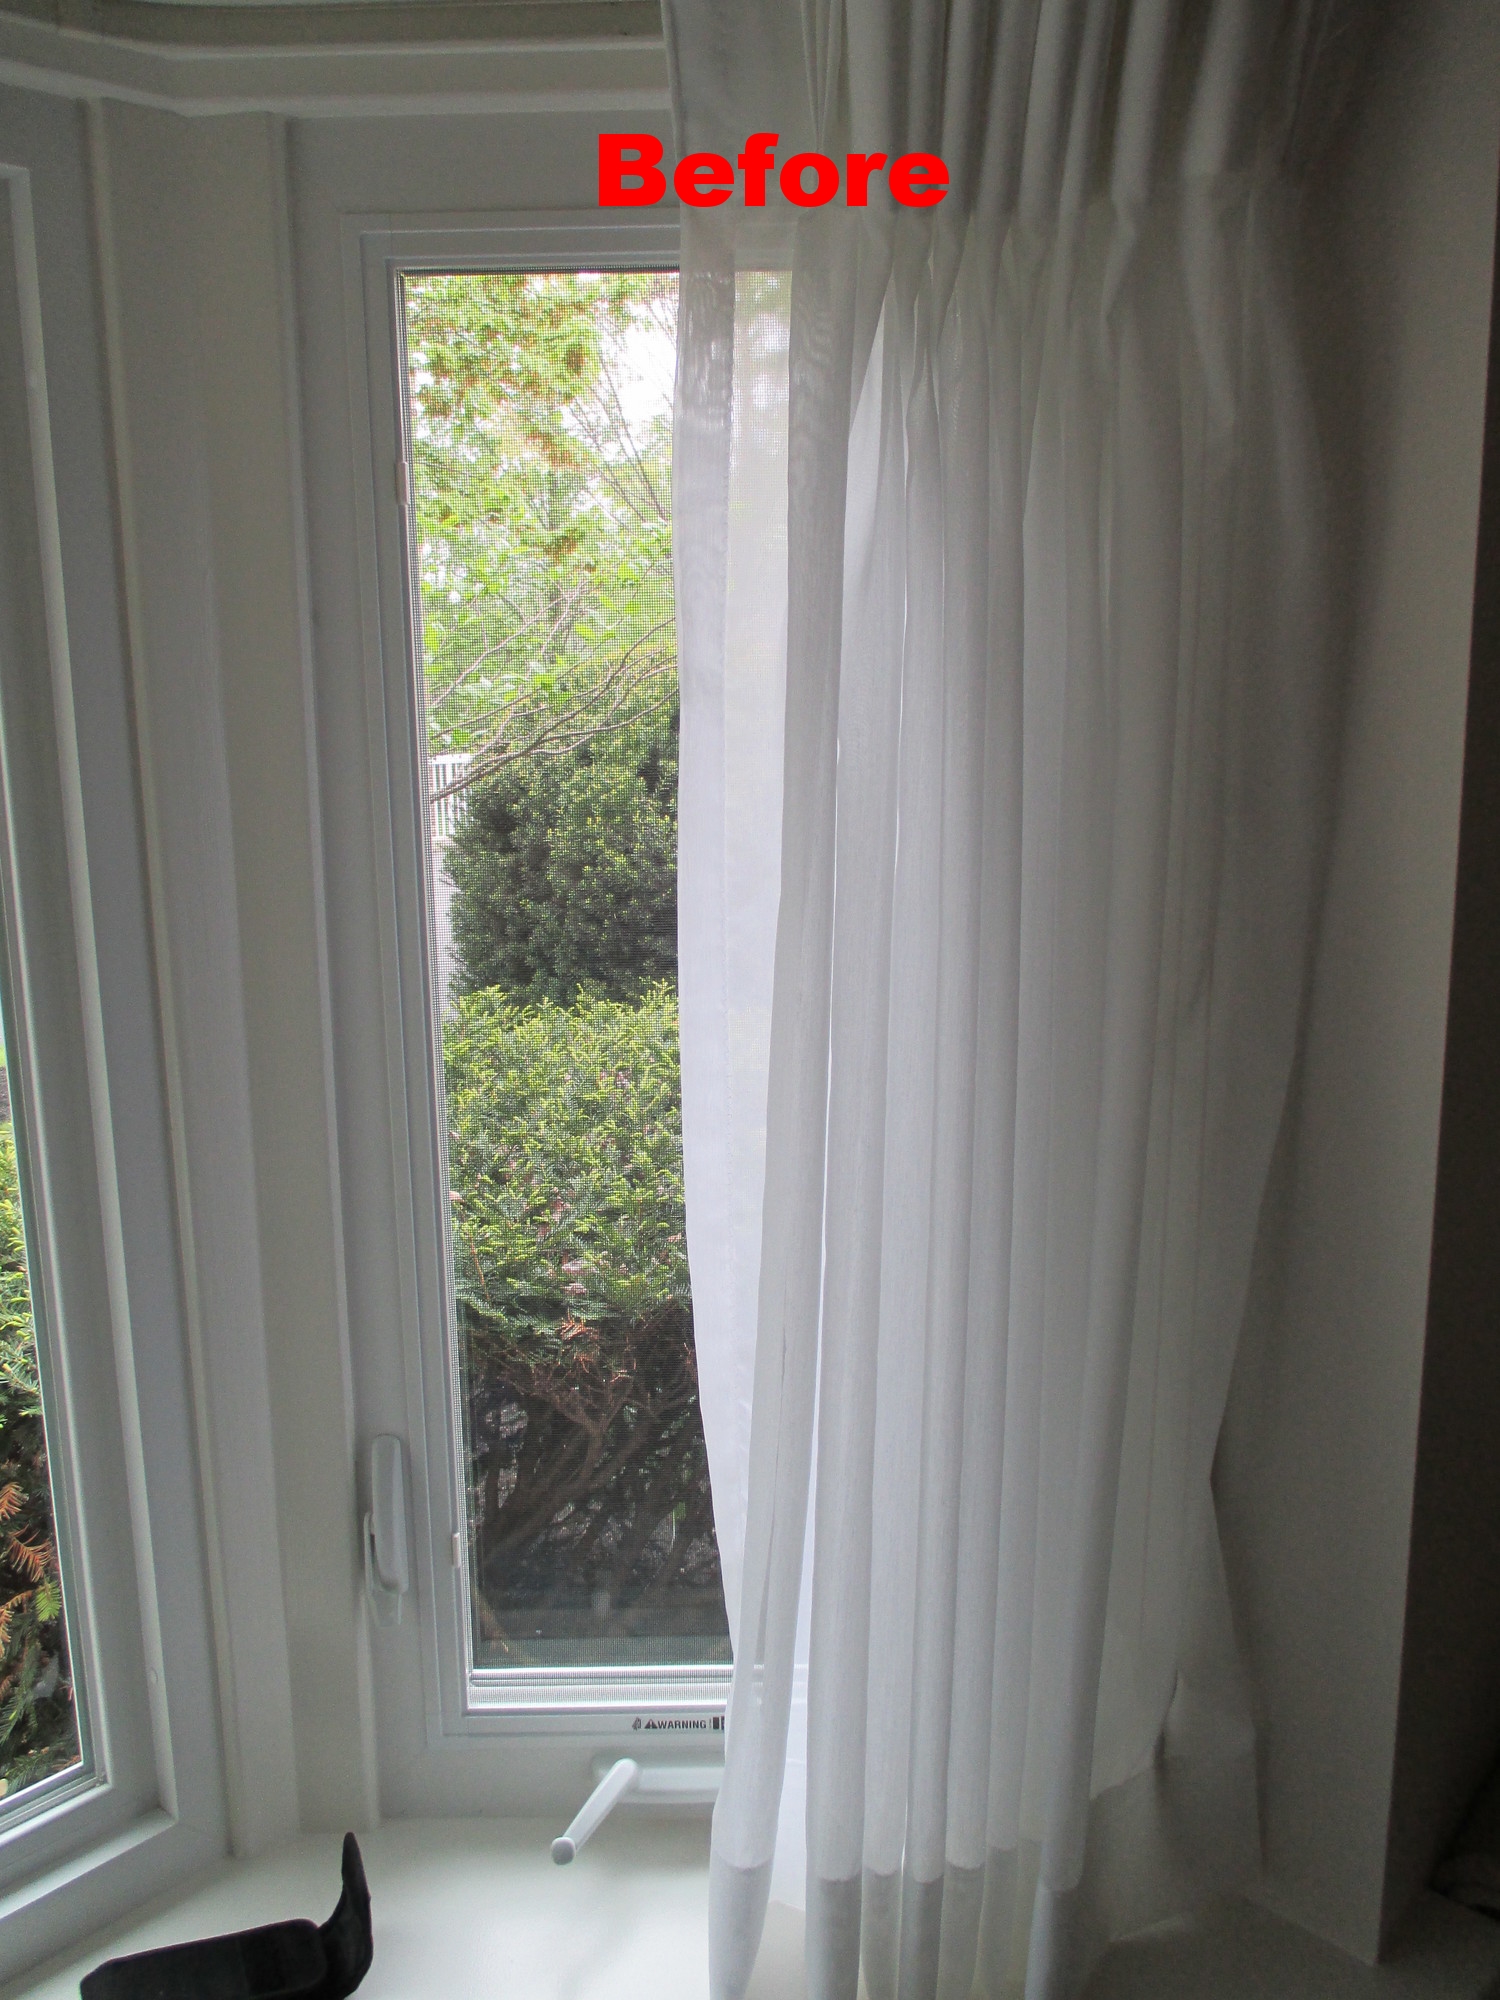 2014-05-09 -  Mea (Bedroom Window) - Yeagley, Jestena.JPG